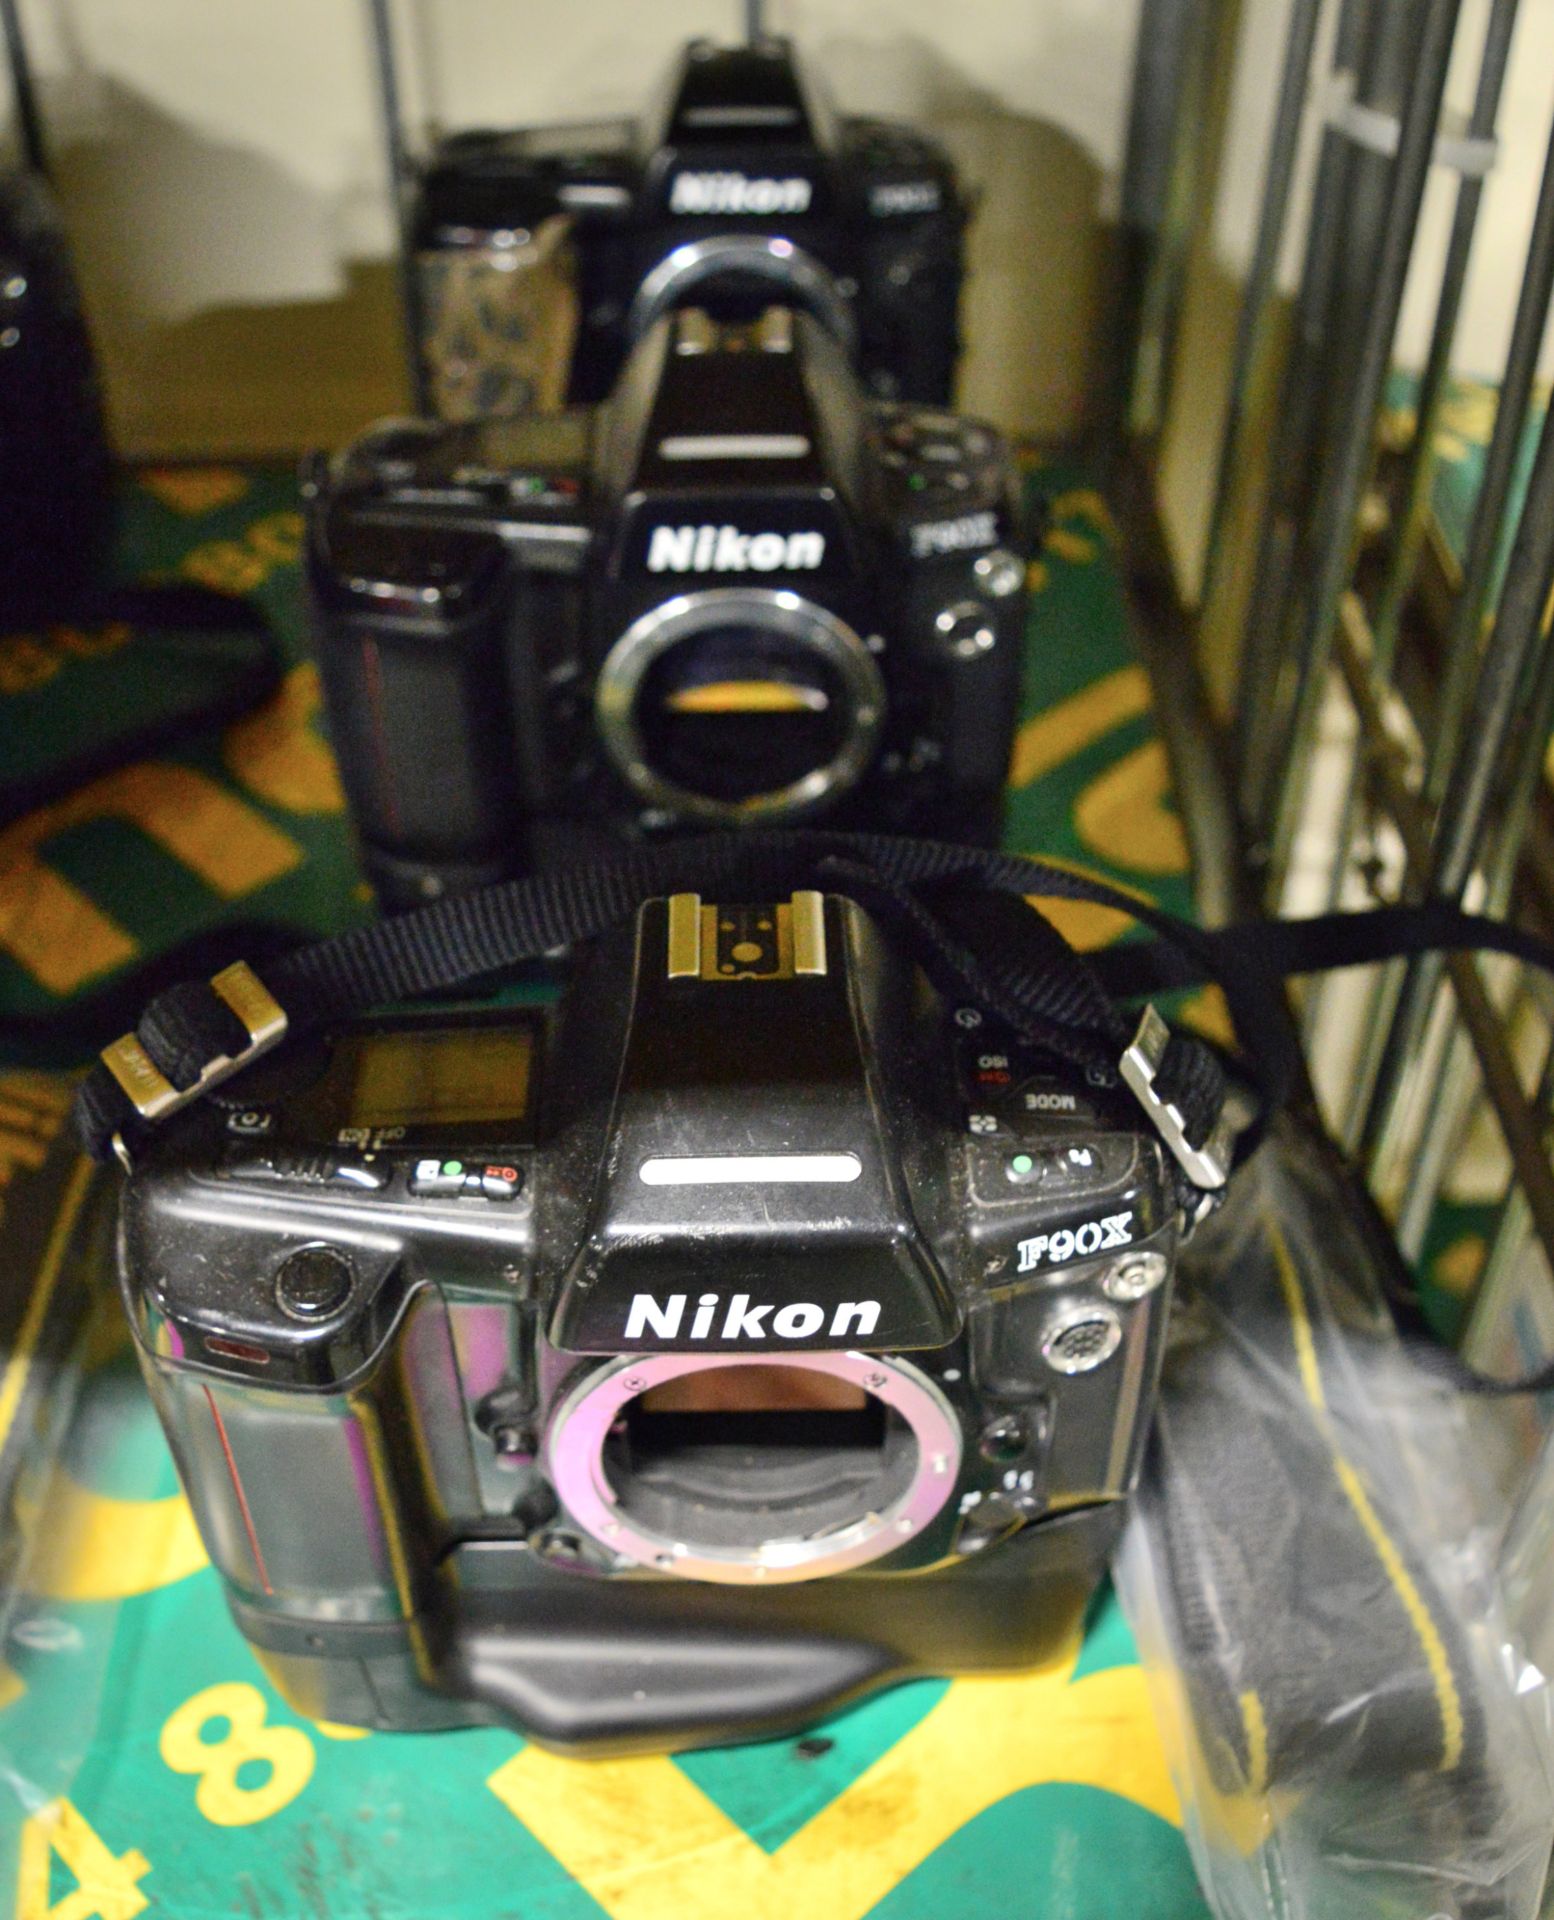 3x Nikon F90X Camera Bodies with Battery Boxes. Strap.